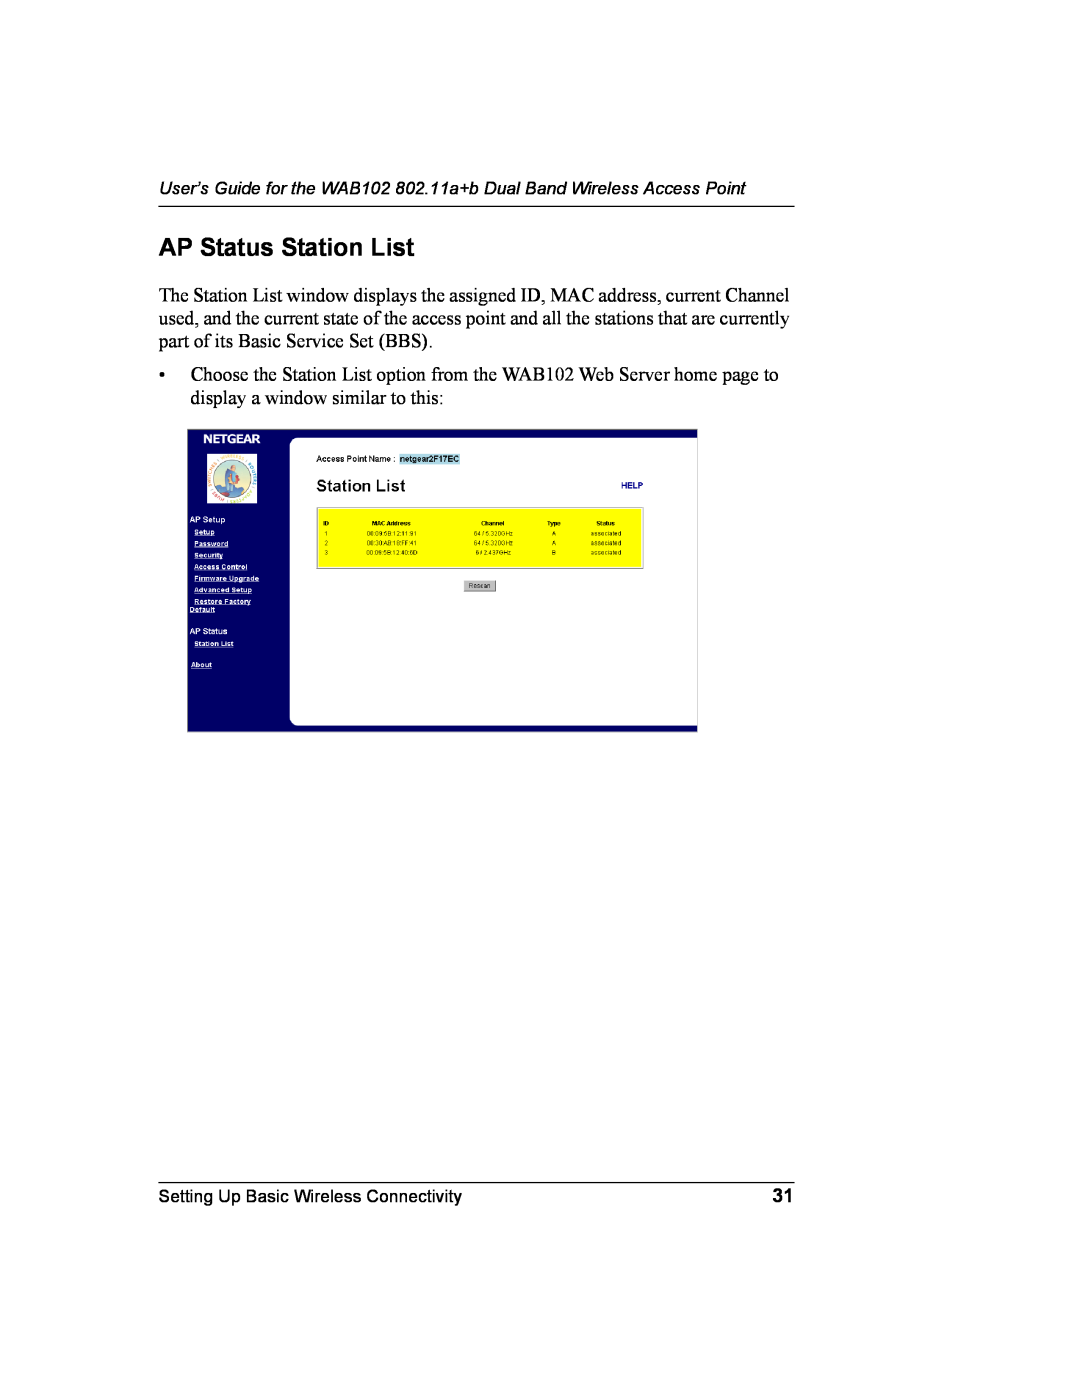 NETGEAR WAB102 manual AP Status Station List 